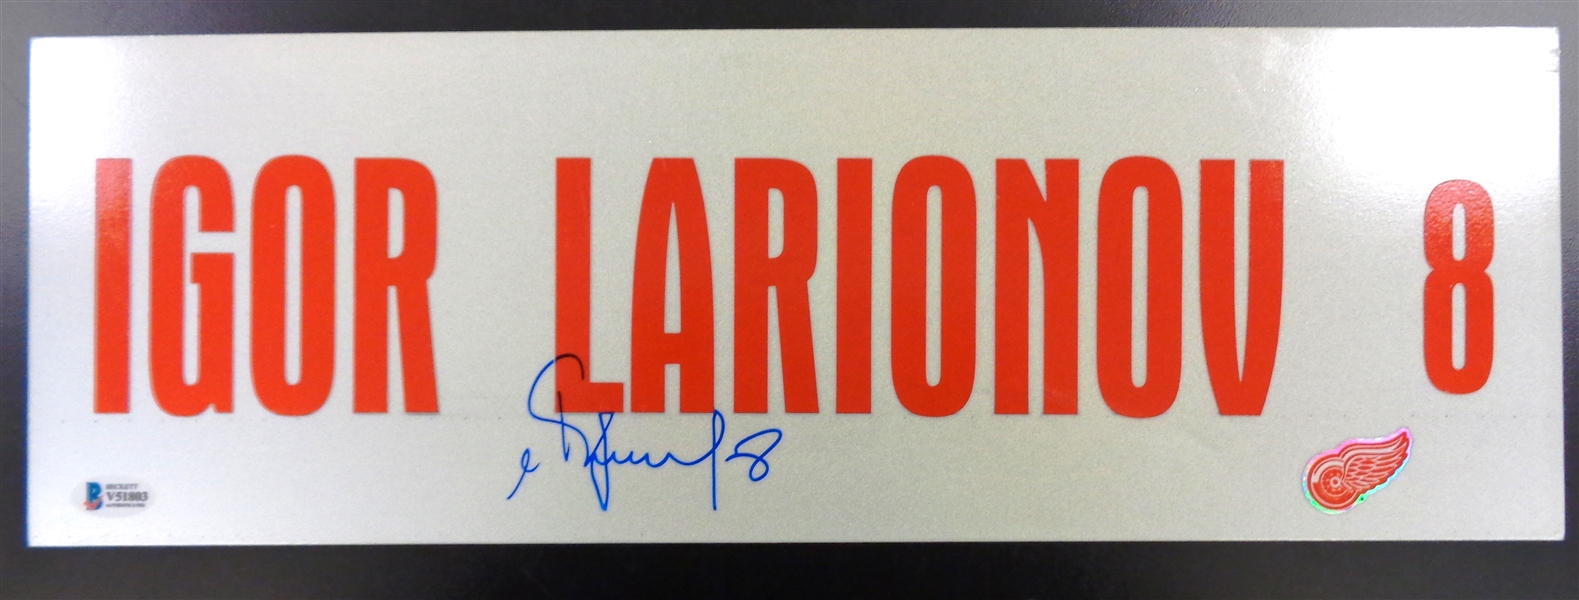 Igor Larionov Autographed 6x18 Metal Street Sign